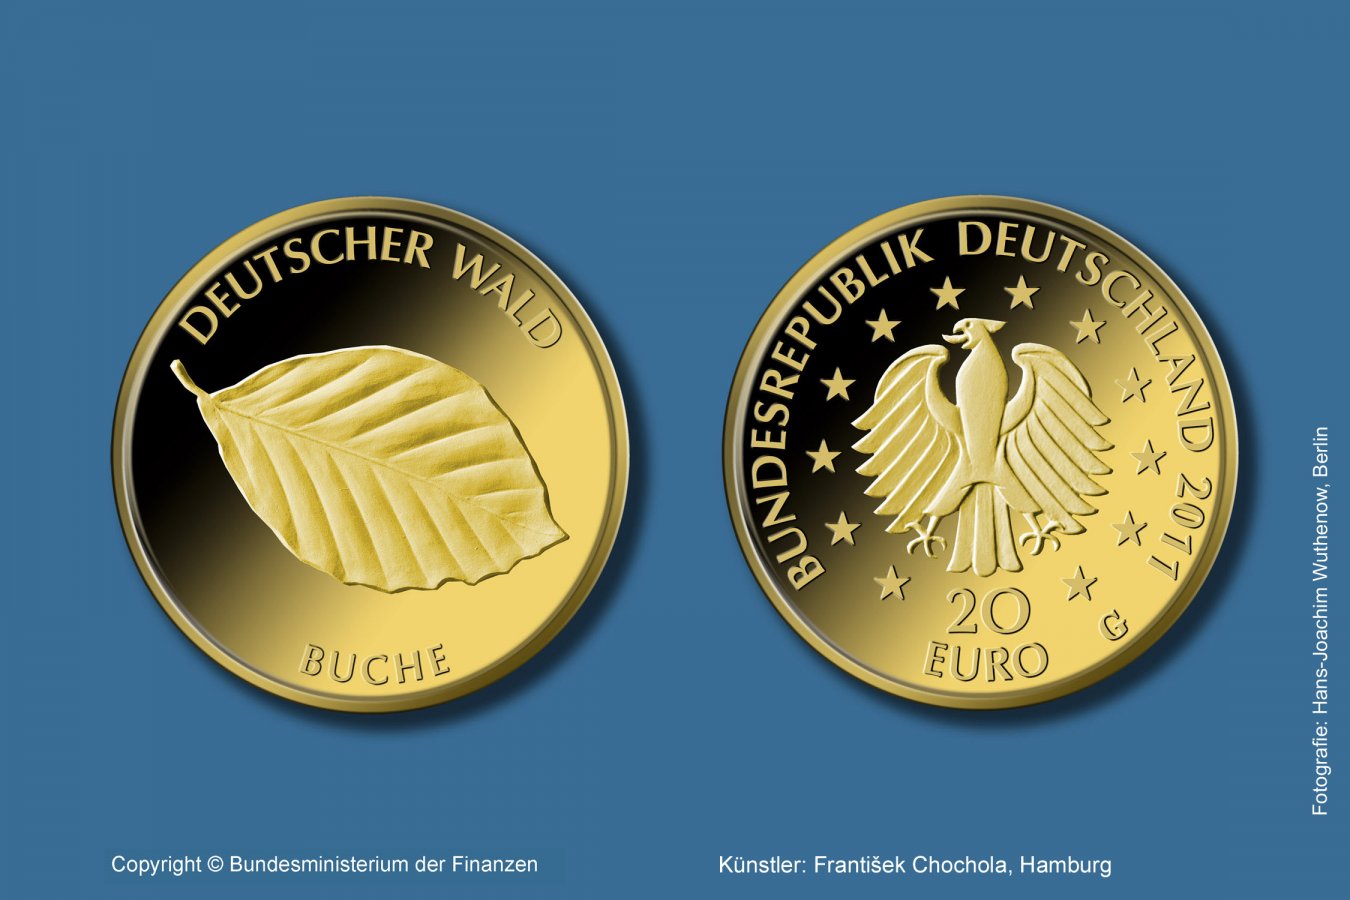 Download 20-Euro-Goldmünze 2011 "Buche" 